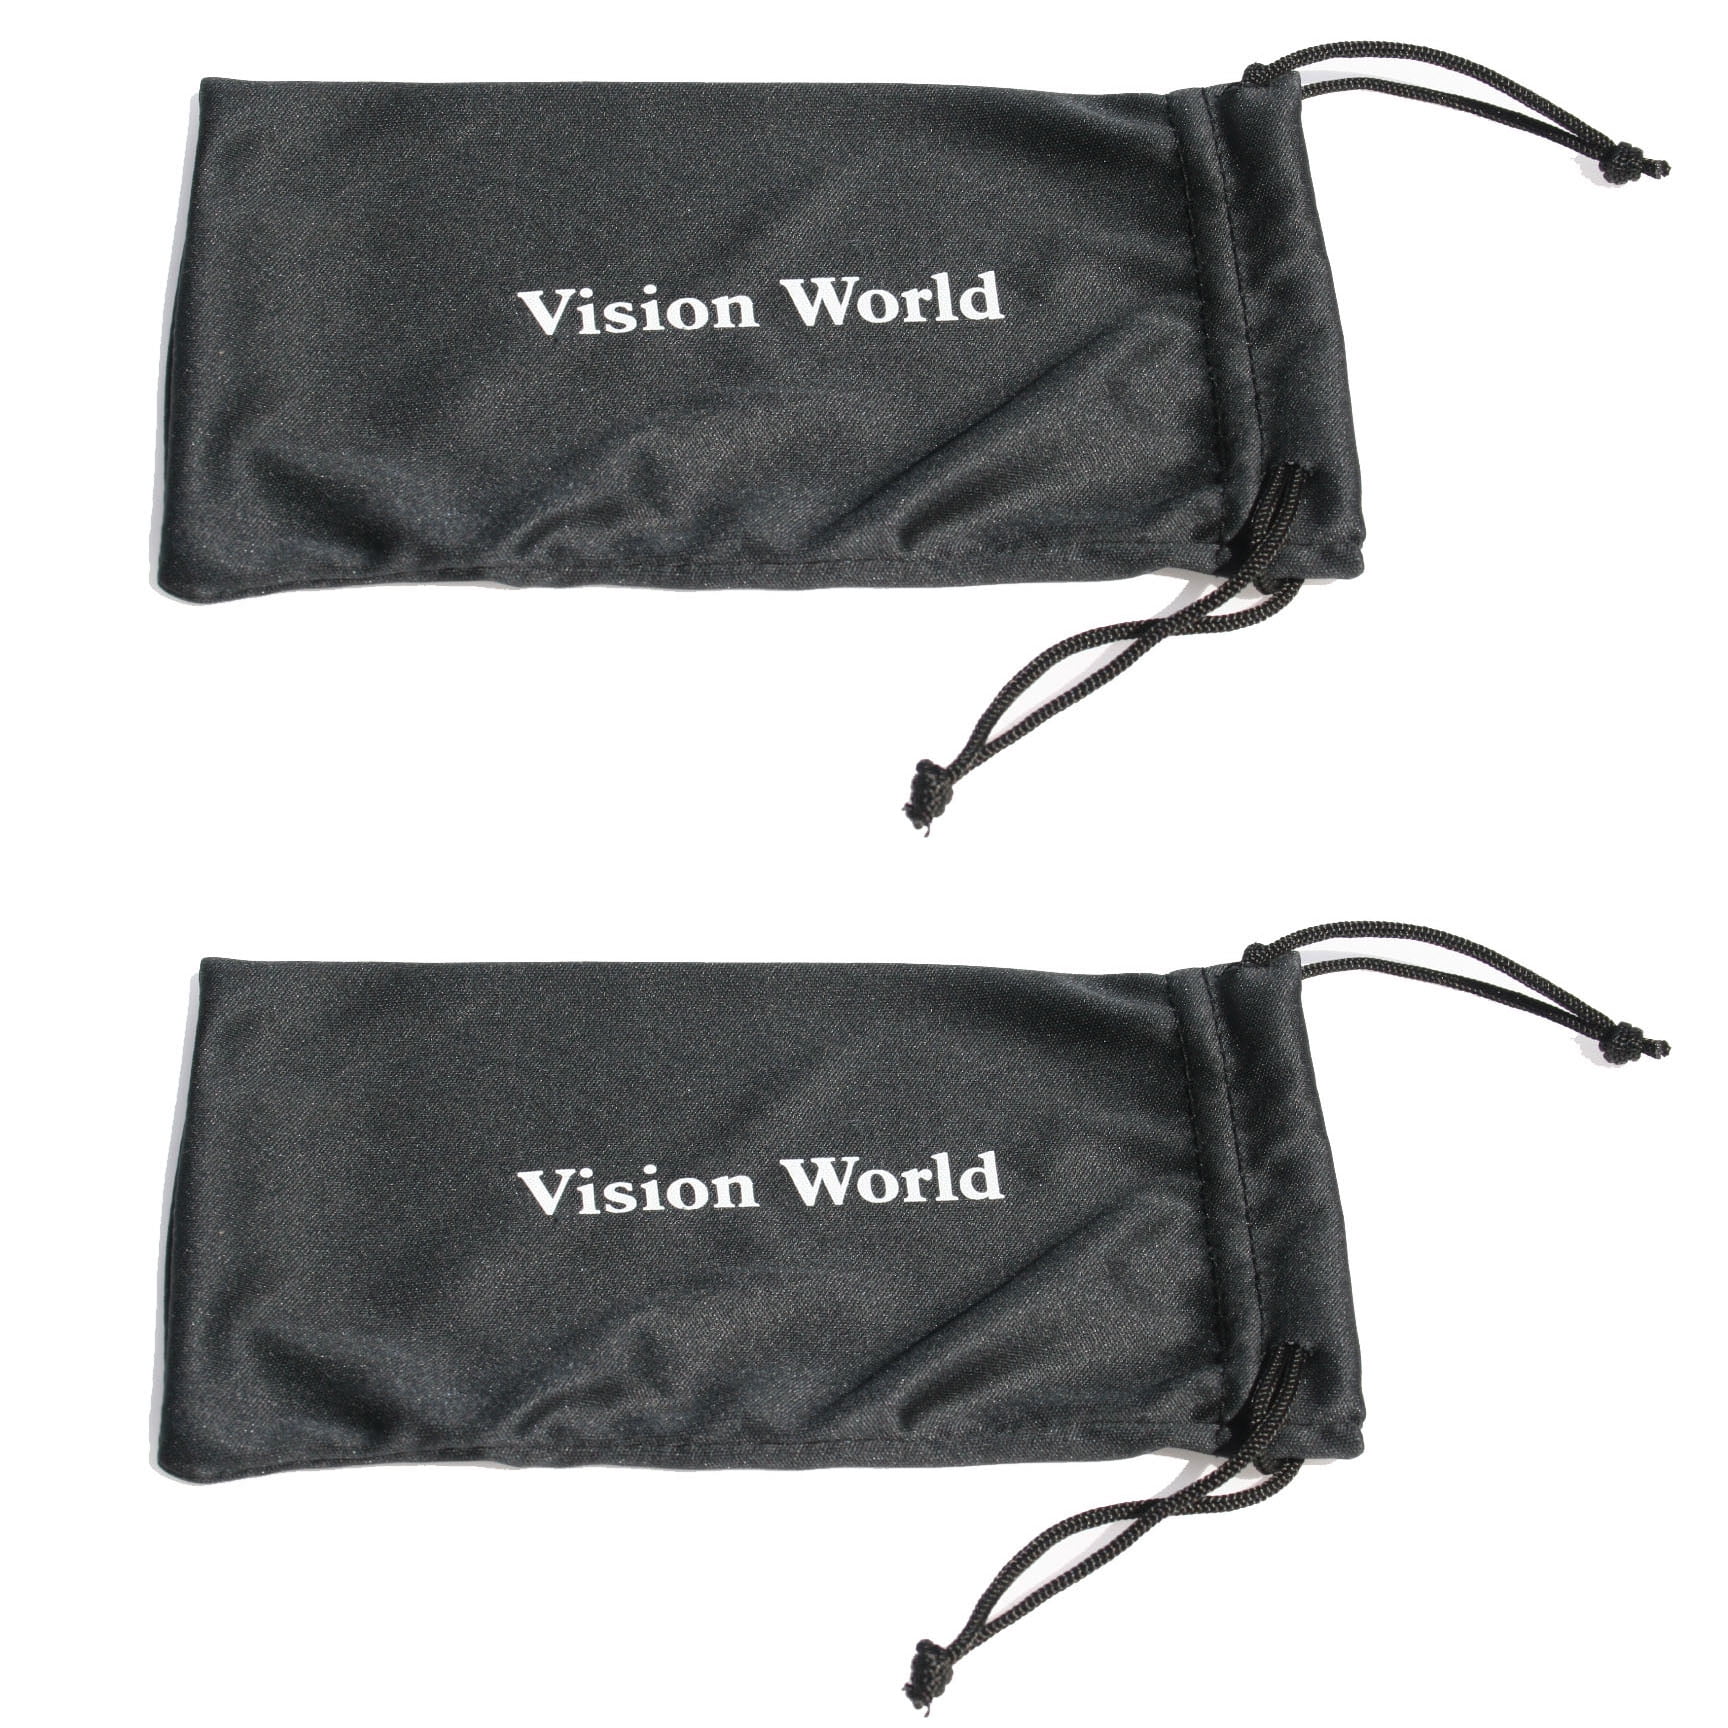 KISDATE Retro Cateye Sun Readers UV400 Protection Kisdate Superior Bifocal Reading Sunglasses for Women B3005 1 Black & 1 Tortoise, 1.50 Classic Shades Black & Tortoise 